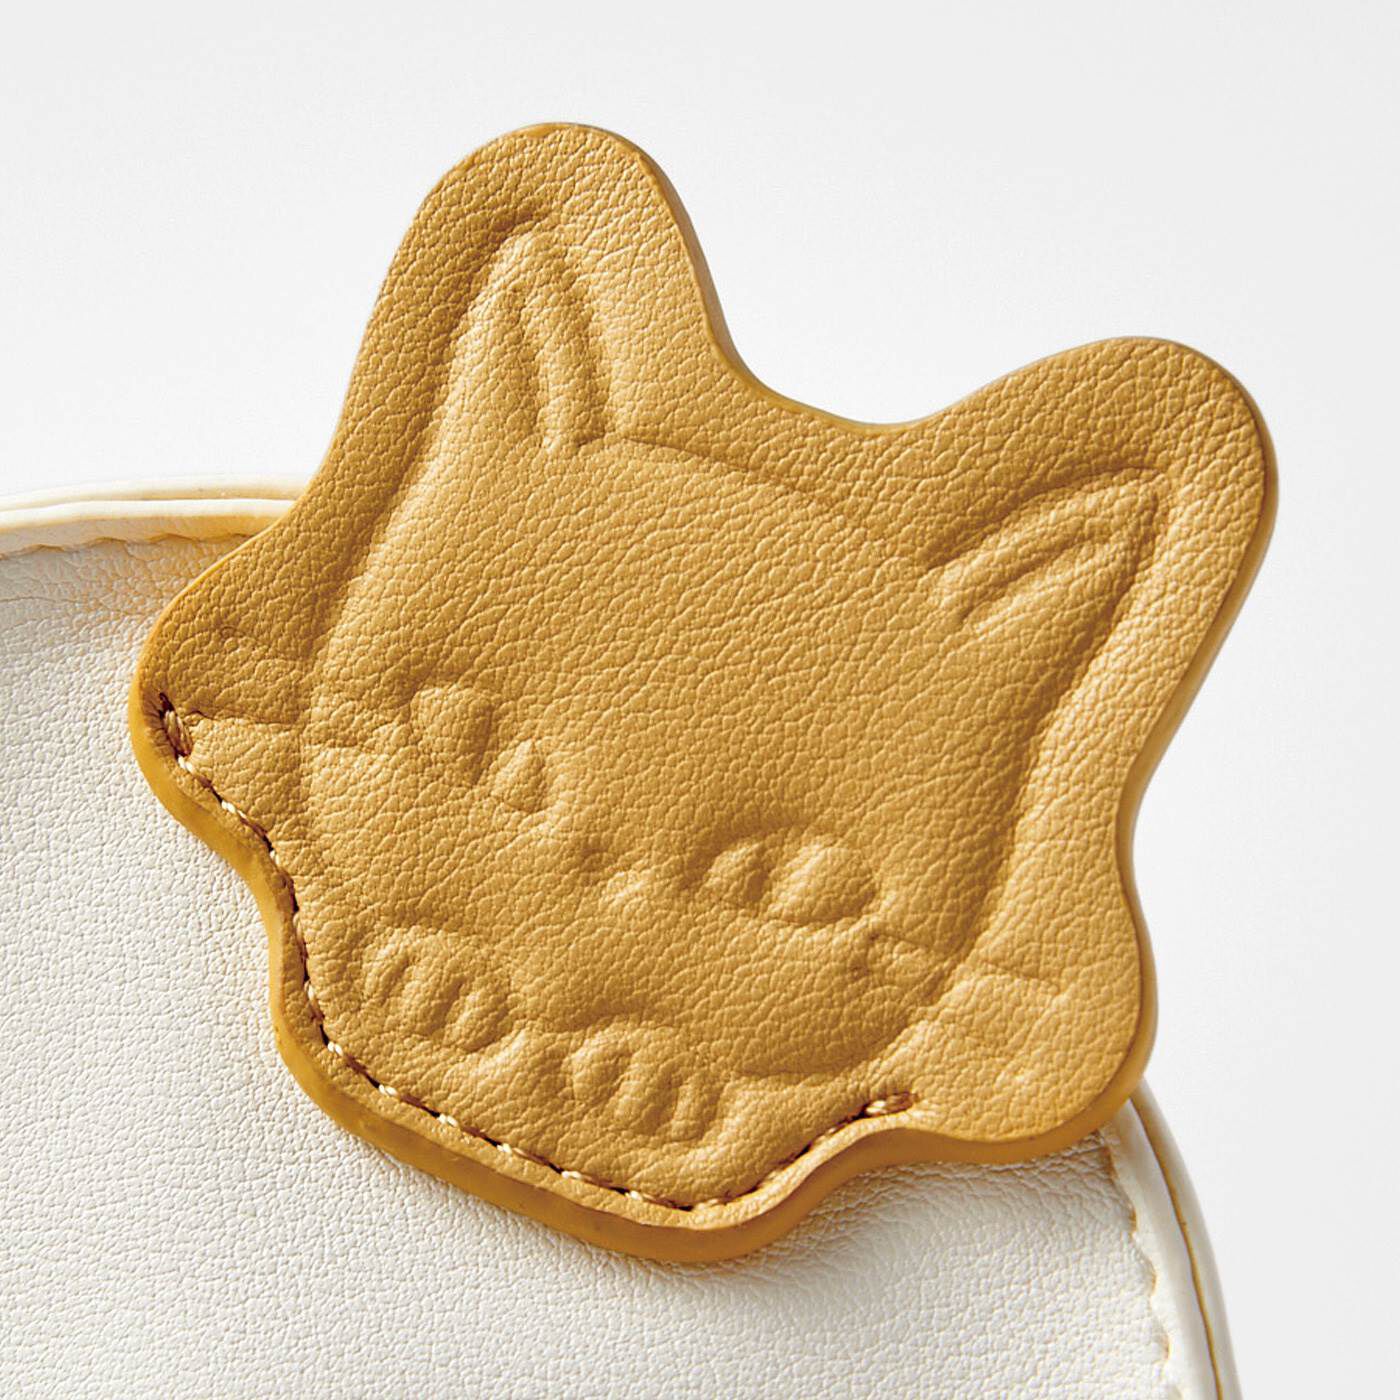 Real Stock|純喫茶７ふしぎ from NEKOBU　ゼリーのお魚が泳ぐ ソーダフロートポーチ|アイスを飾る猫形クッキー。